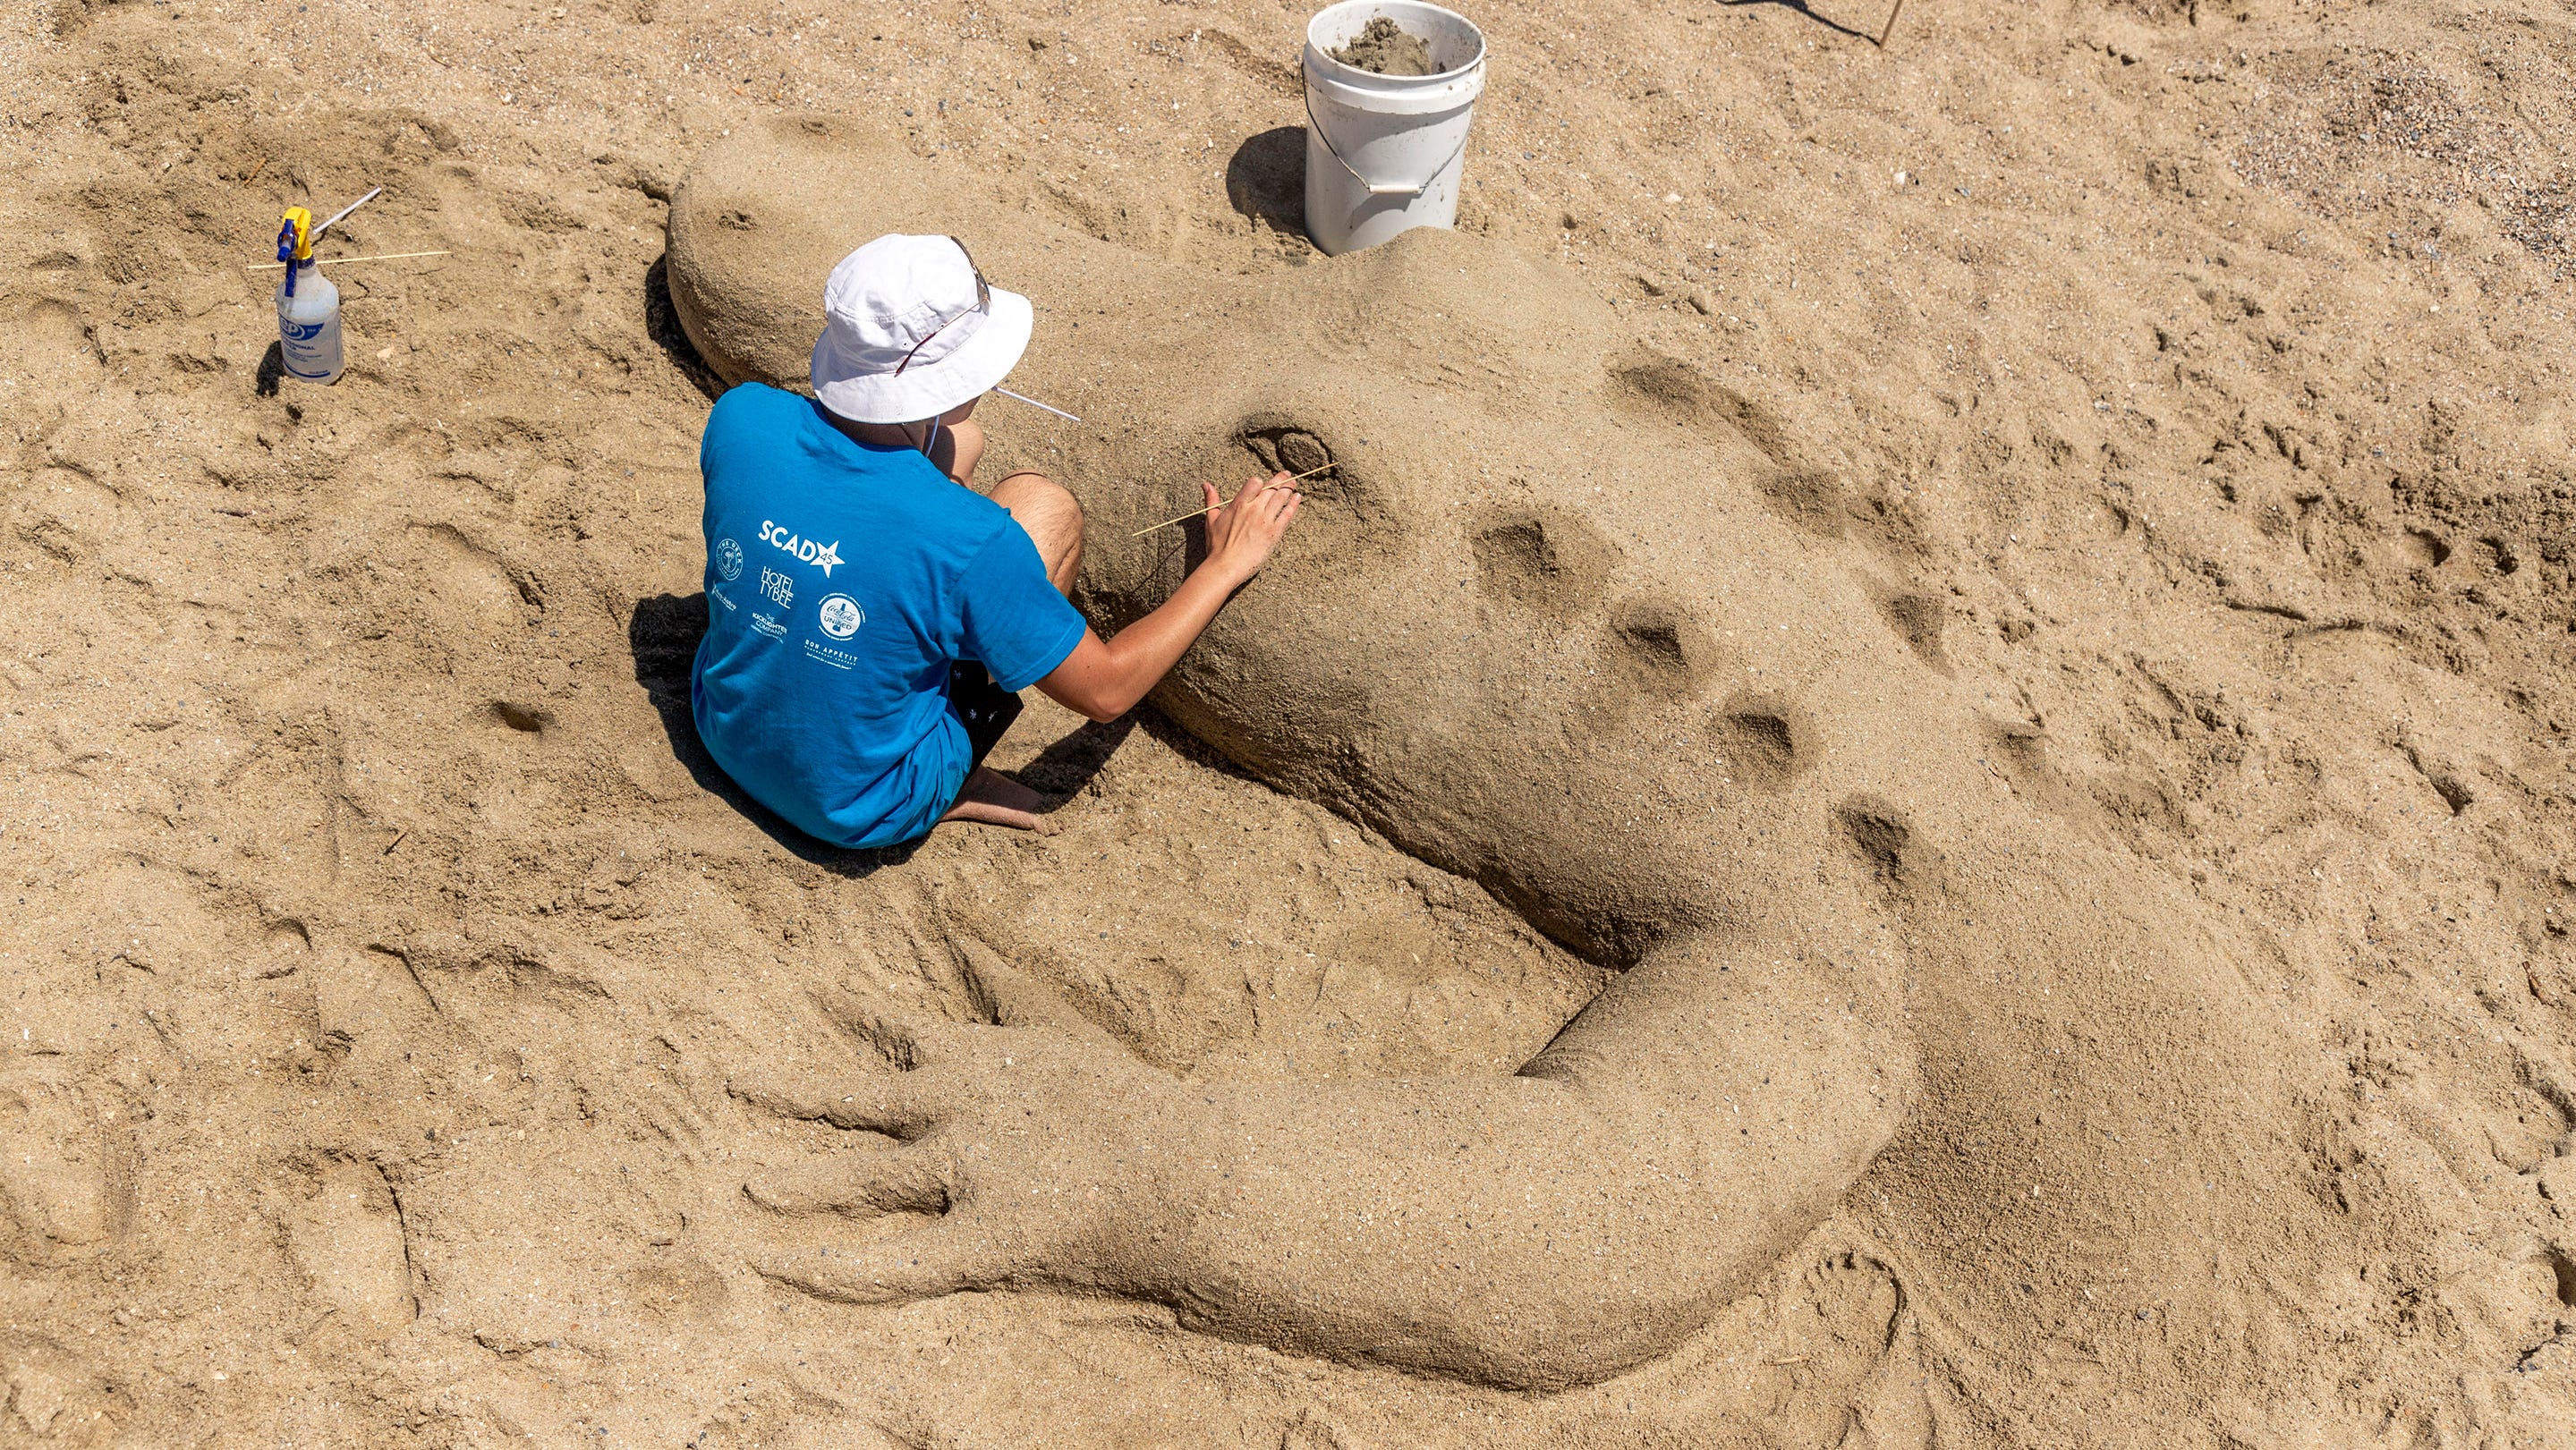 SCAD Sand Art Festival brings art to the beach